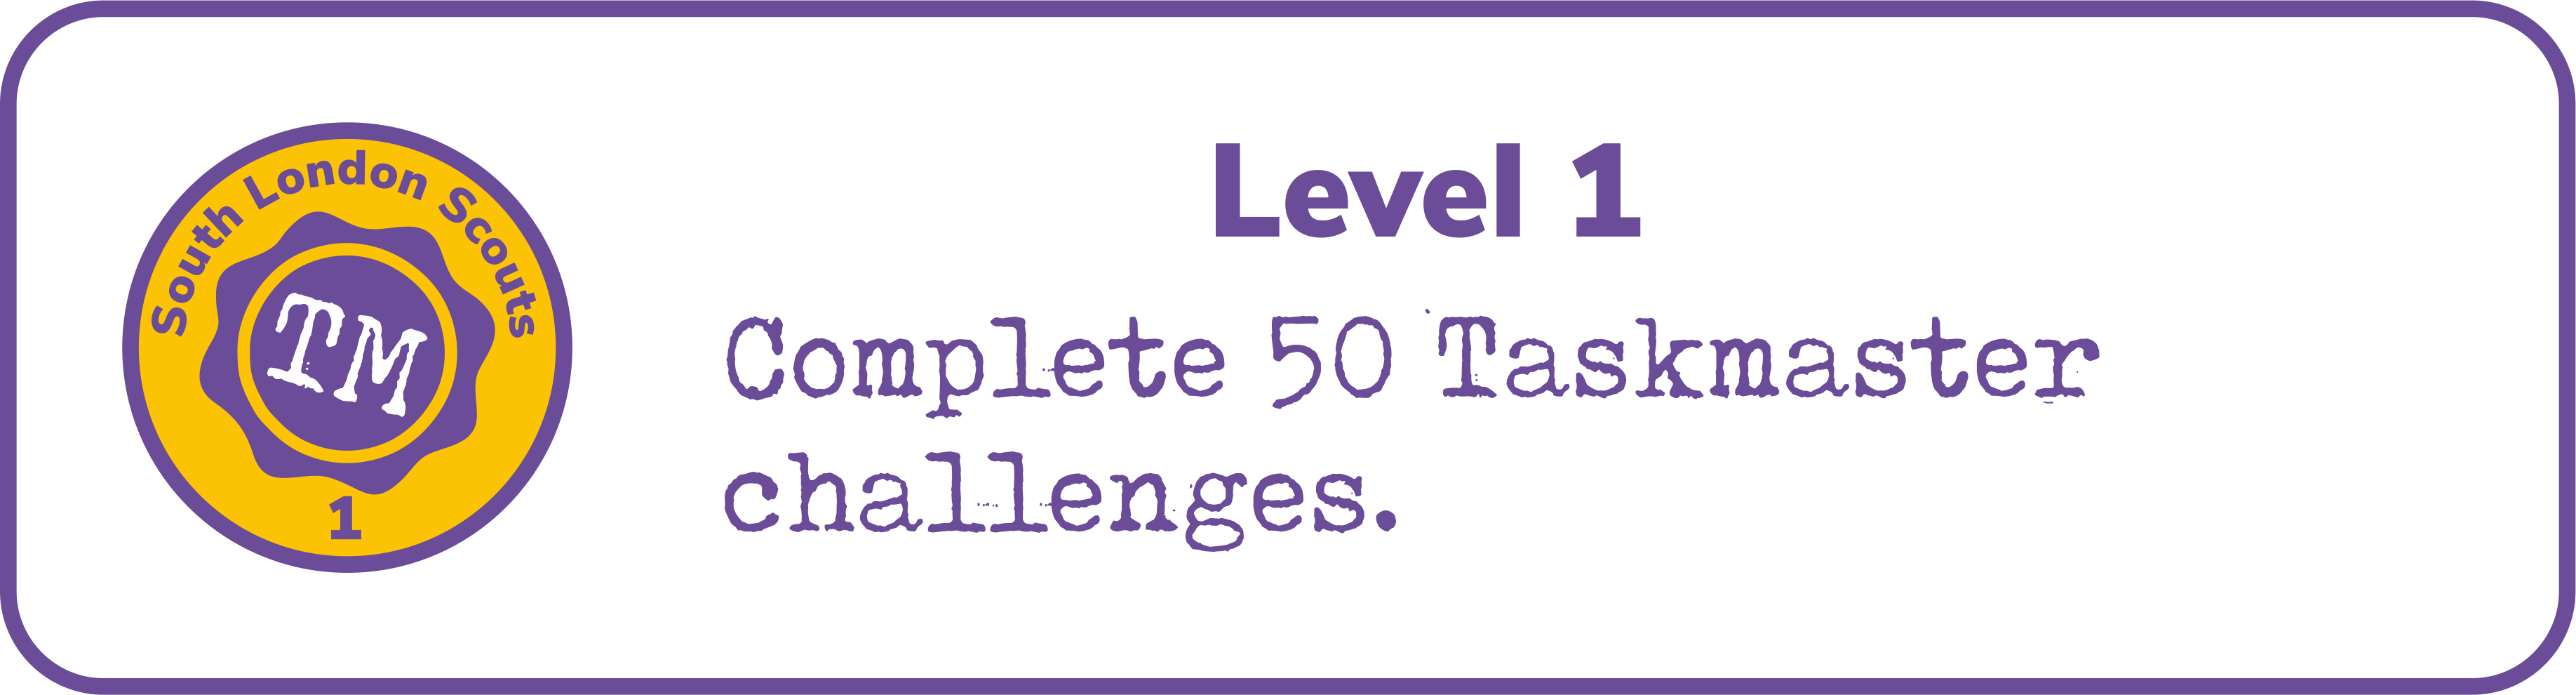 Taskmaster level one - complete 50 taskmaster challenges